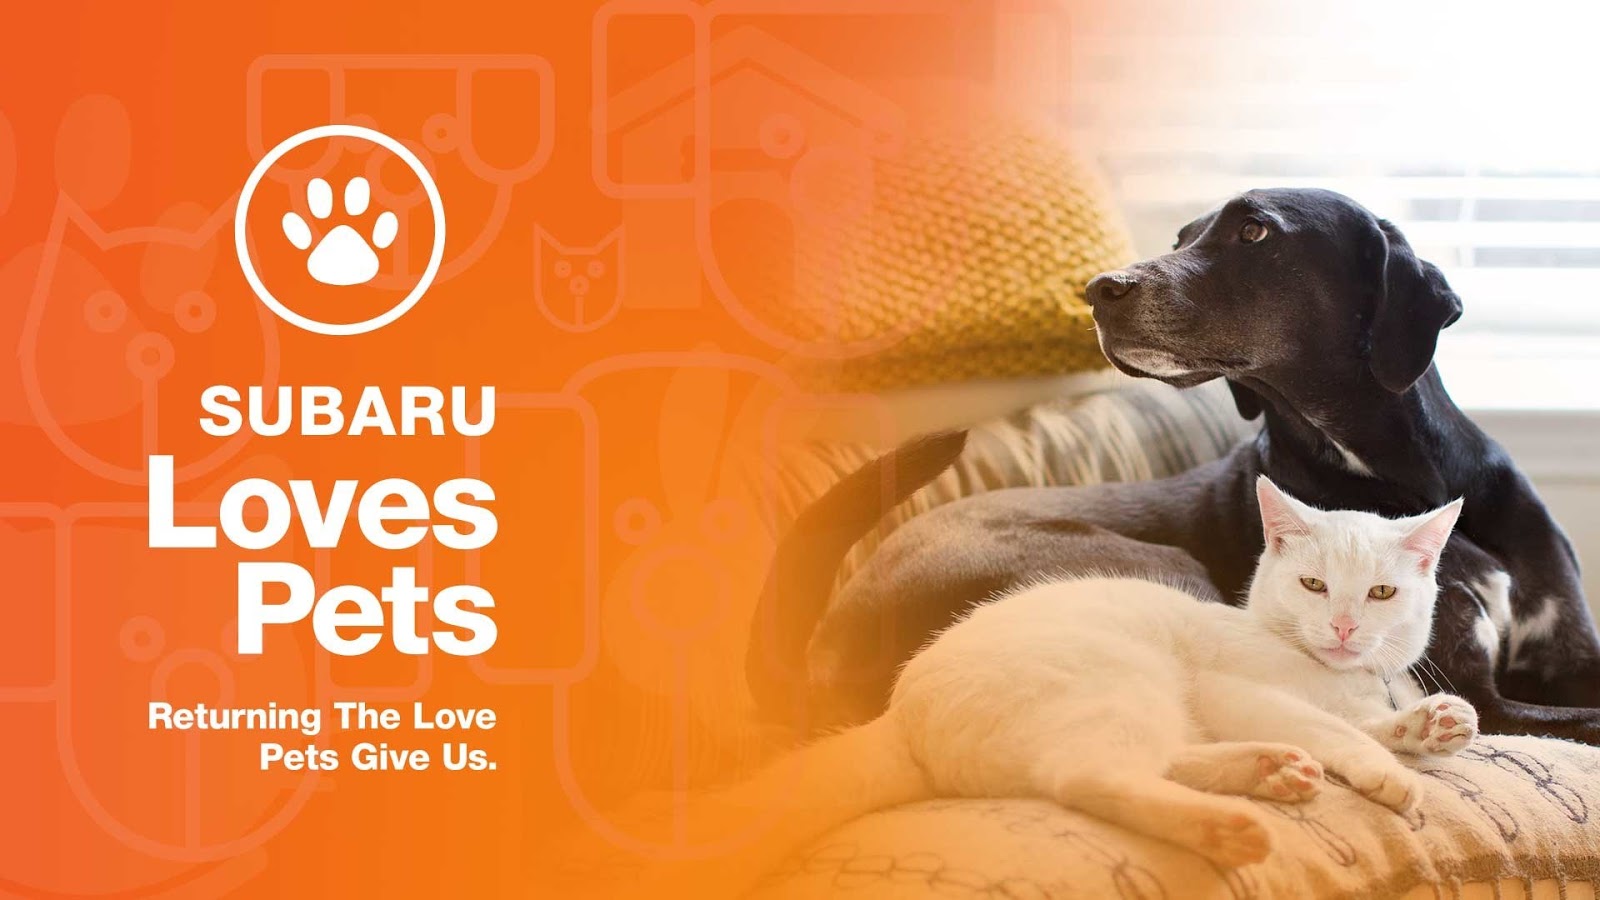 Subaru of America Helps Animals in Need During October "Subaru Loves